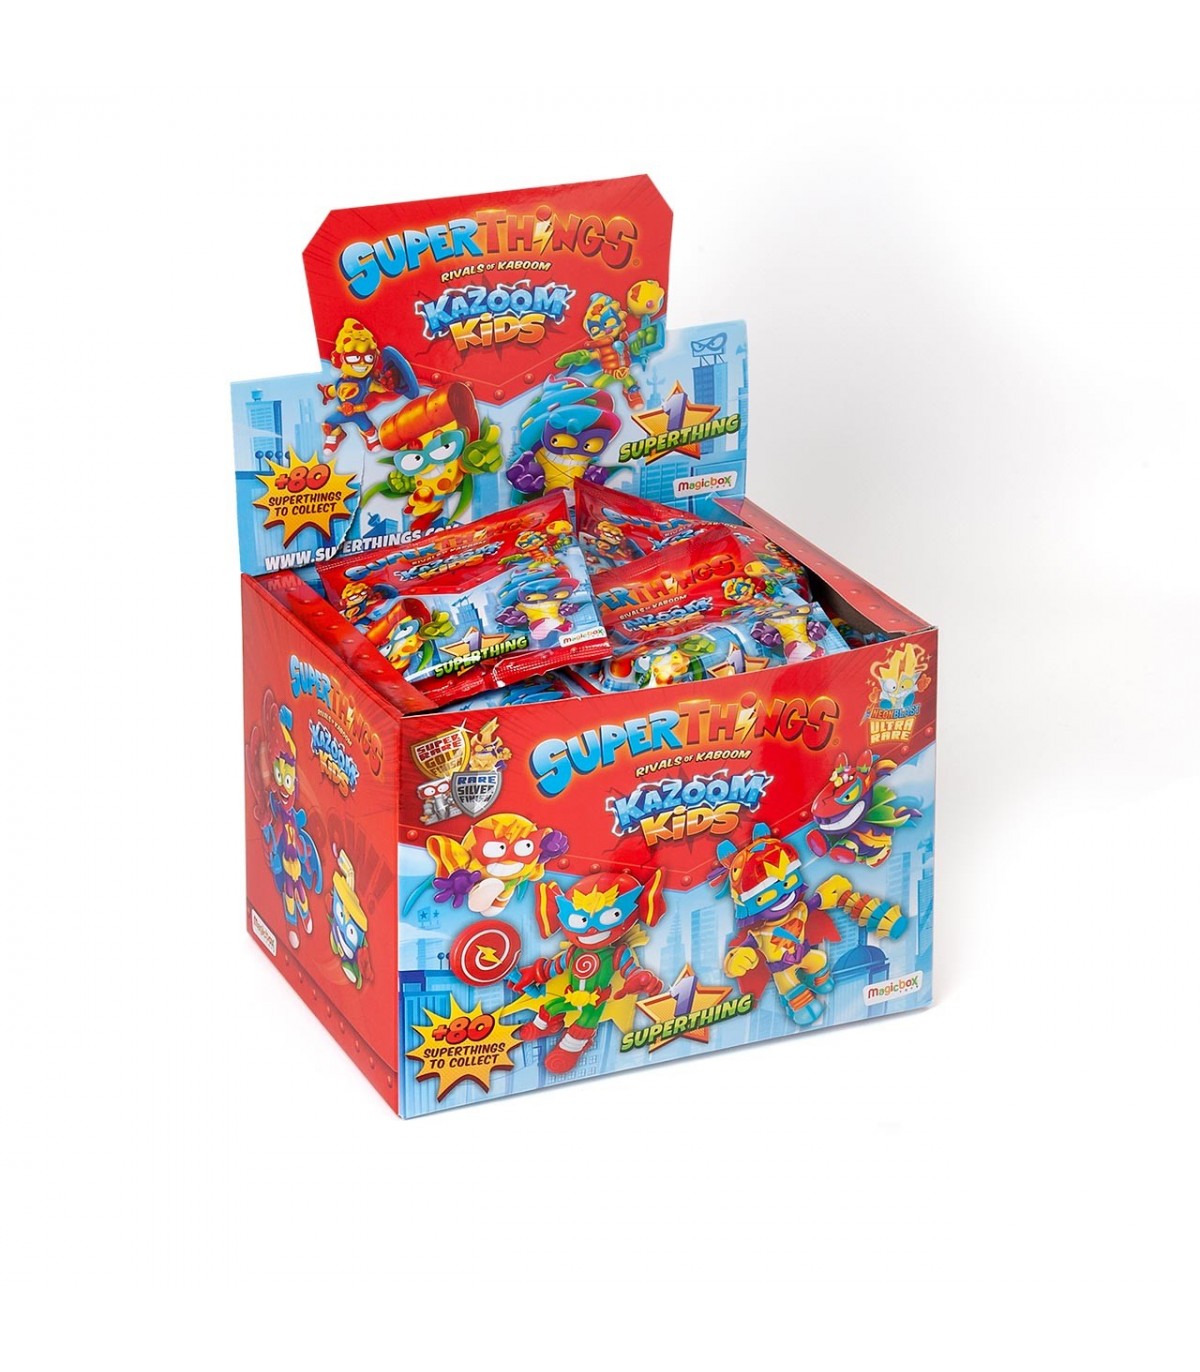 Expositor 50 sobres sorpresa Kazoom Kids PST8D250IN00EXP | SUPERTHINGS MAGIC BOX | Juguetes Abracadabra